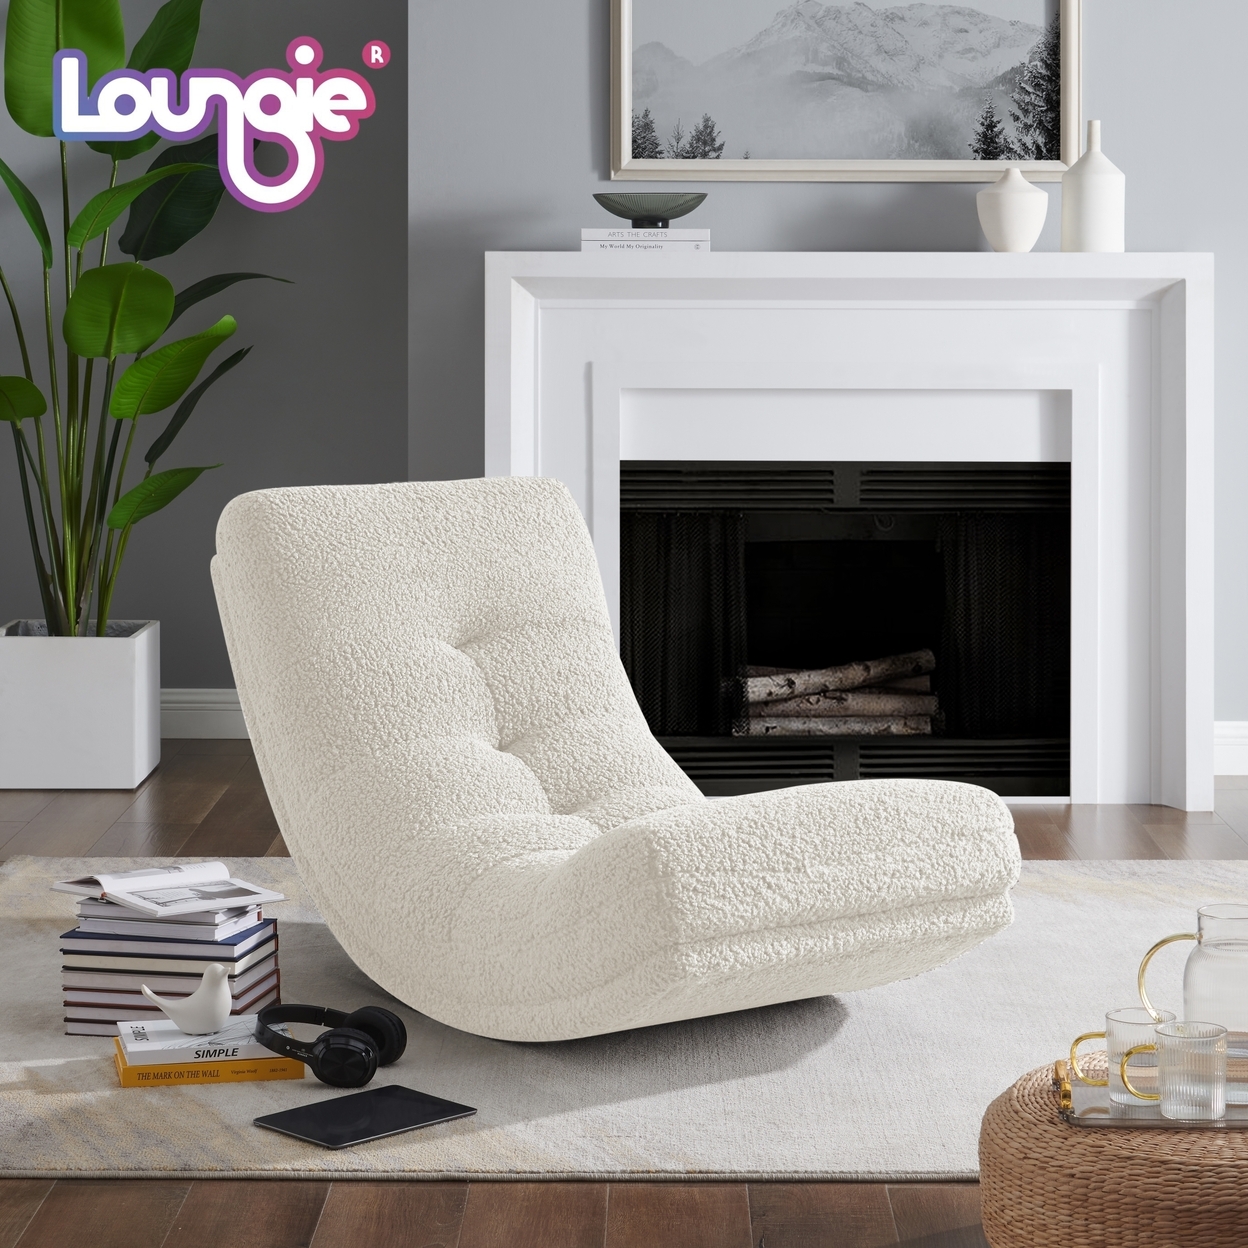 Kaniya Chair - Sherpa Upholstery, Tufted, Gentle Rocking Design, Ergonomic Shape And Padded Seat - Grey